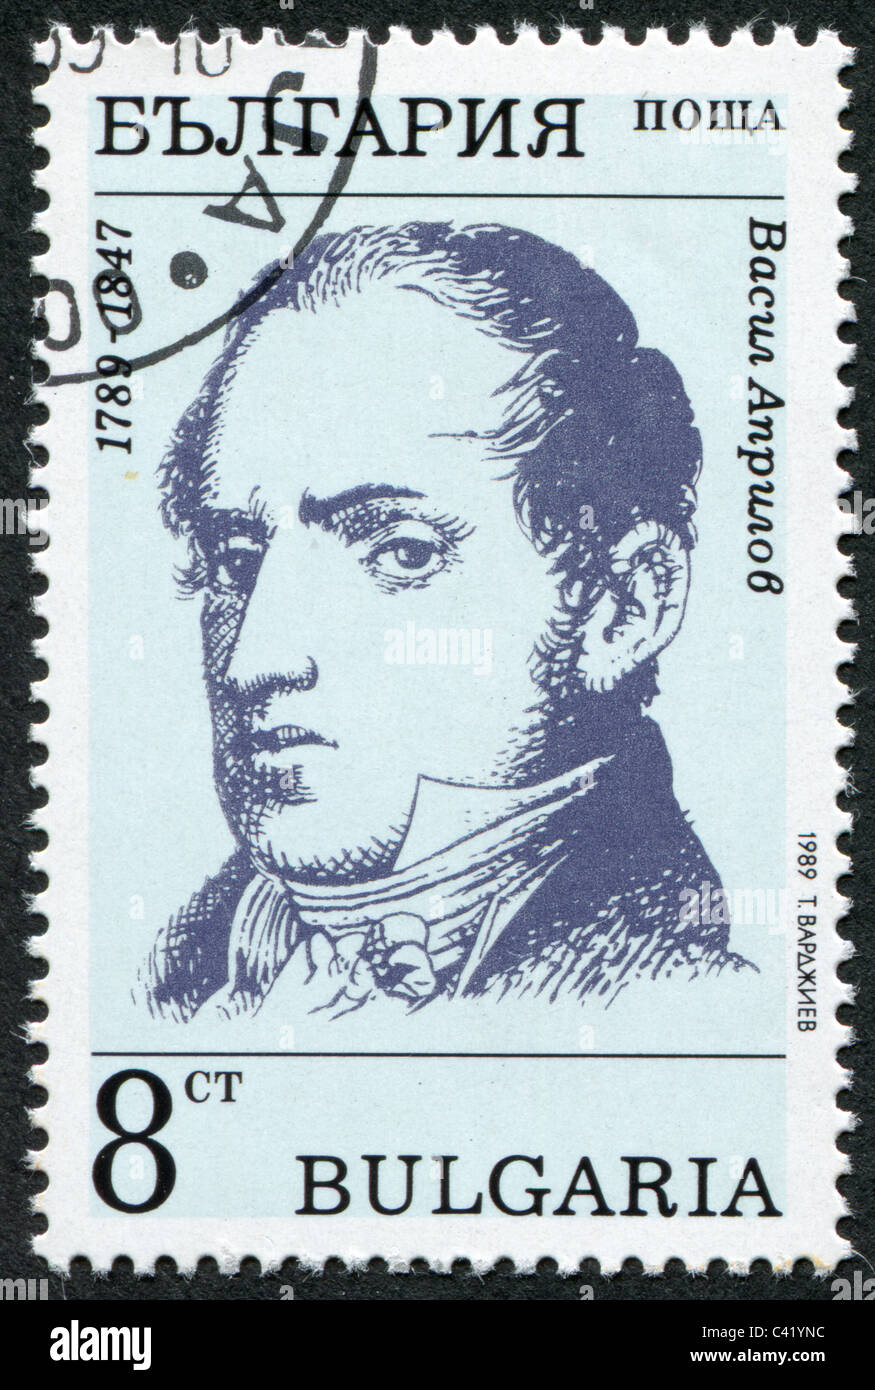 BULGARIA-1989: A stamp printed in the Bulgaria, shows a Bulgarian educator Vasil Aprilov Stock Photo